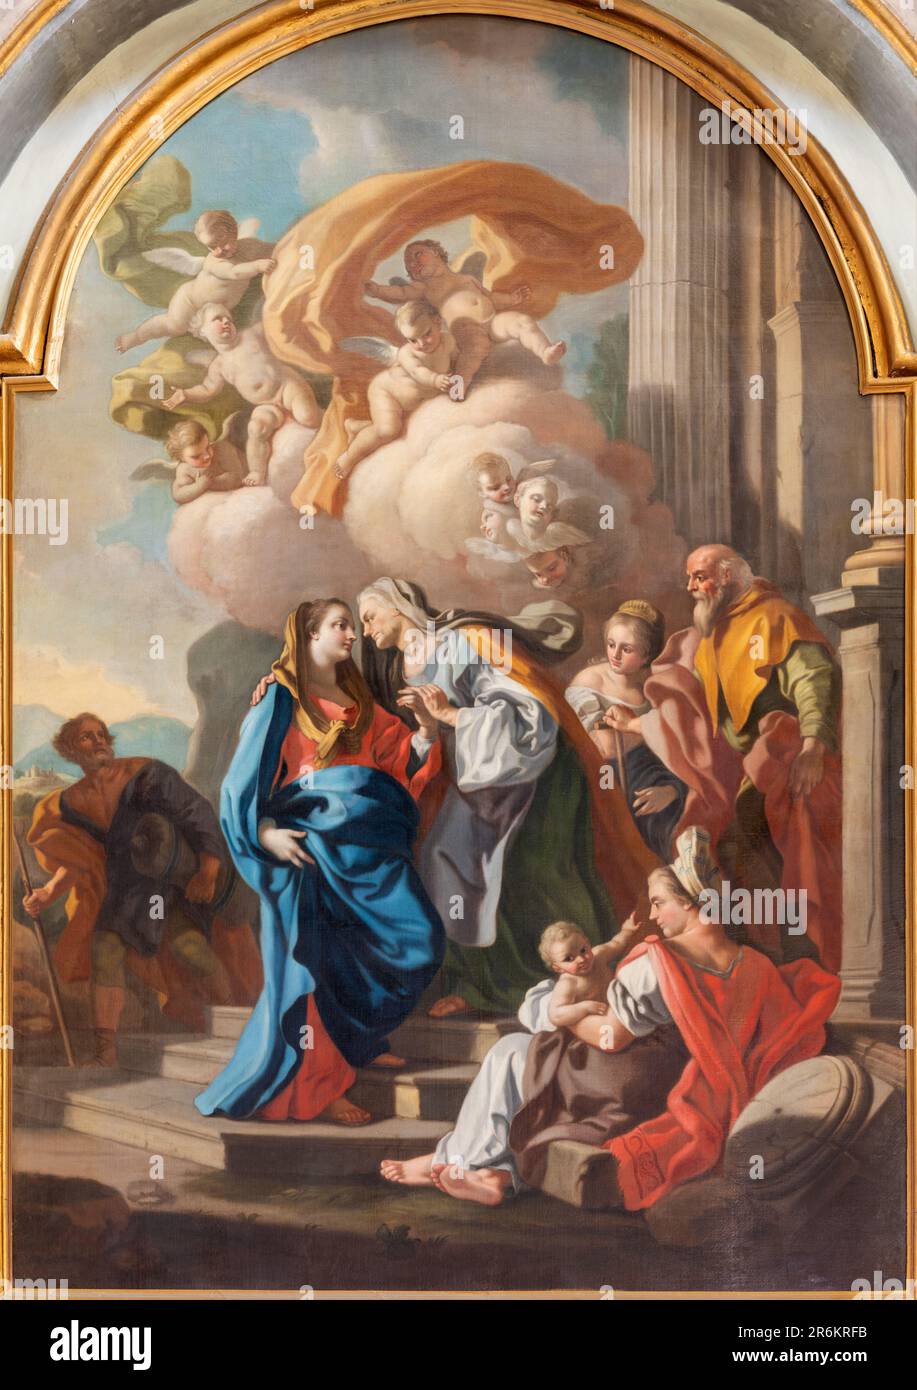 NEAPEL, ITALIEN - 23. APRIL 2023: Das Gemälde des Besuchs in der Kirche Chiesa di San Nicola alla Carita von Francesco de Mura aus dem Jahr 18. Cent. Stockfoto